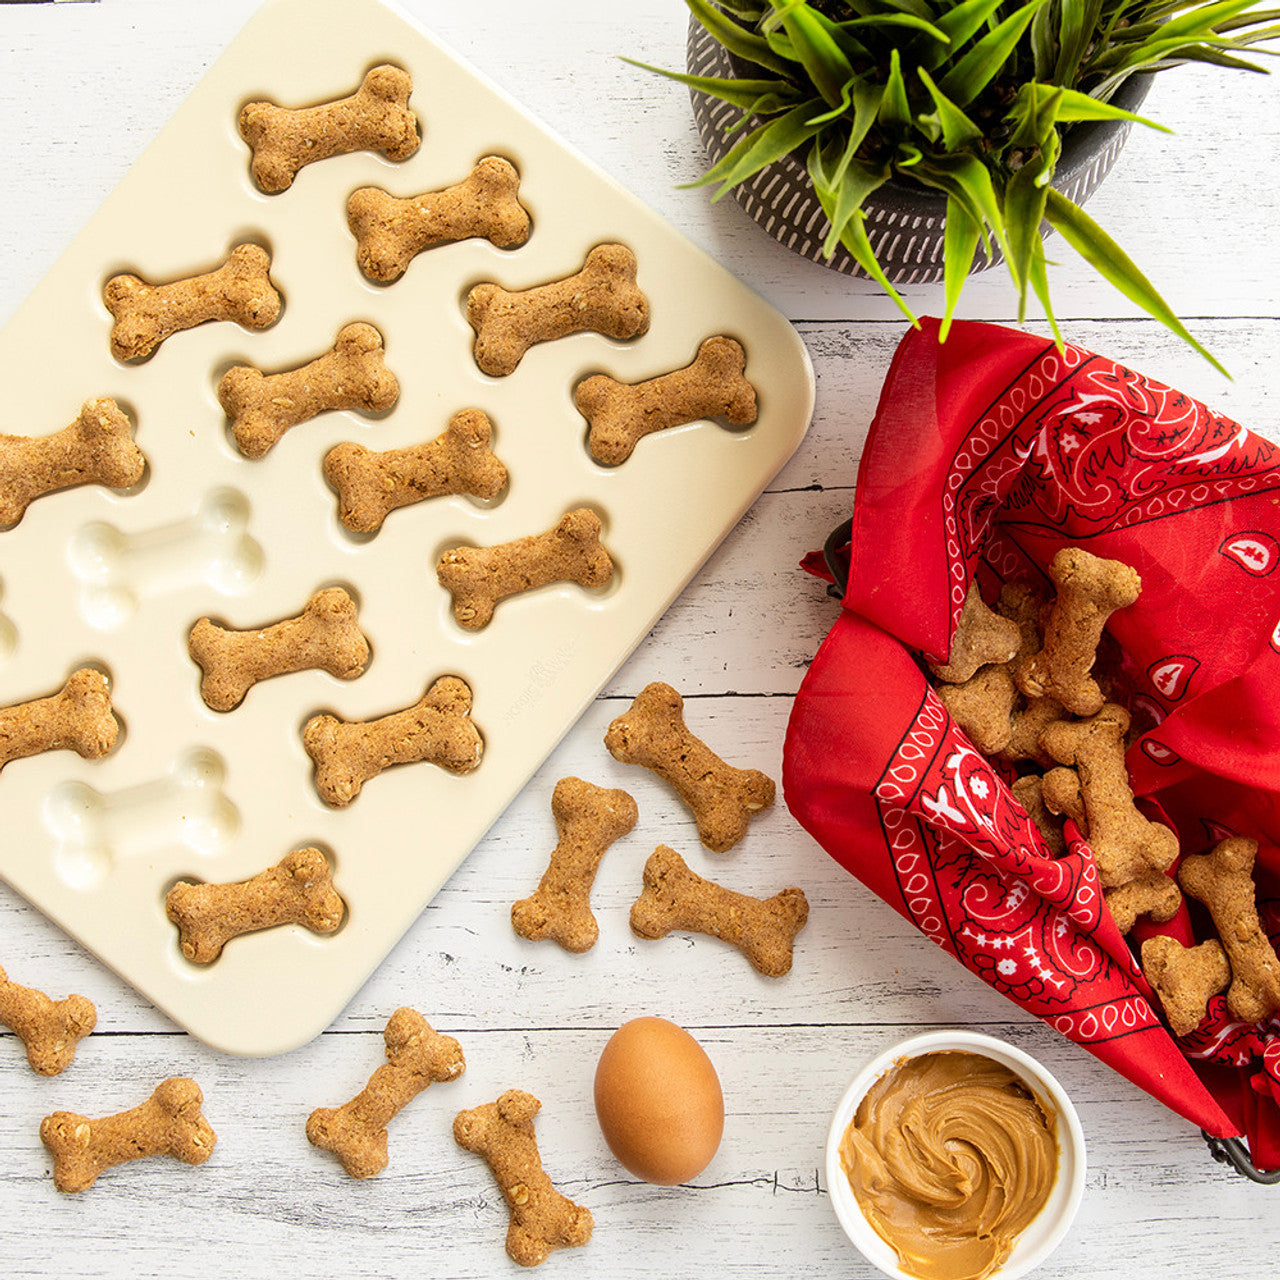 Nordic Ware Puppy Love Baking Pan